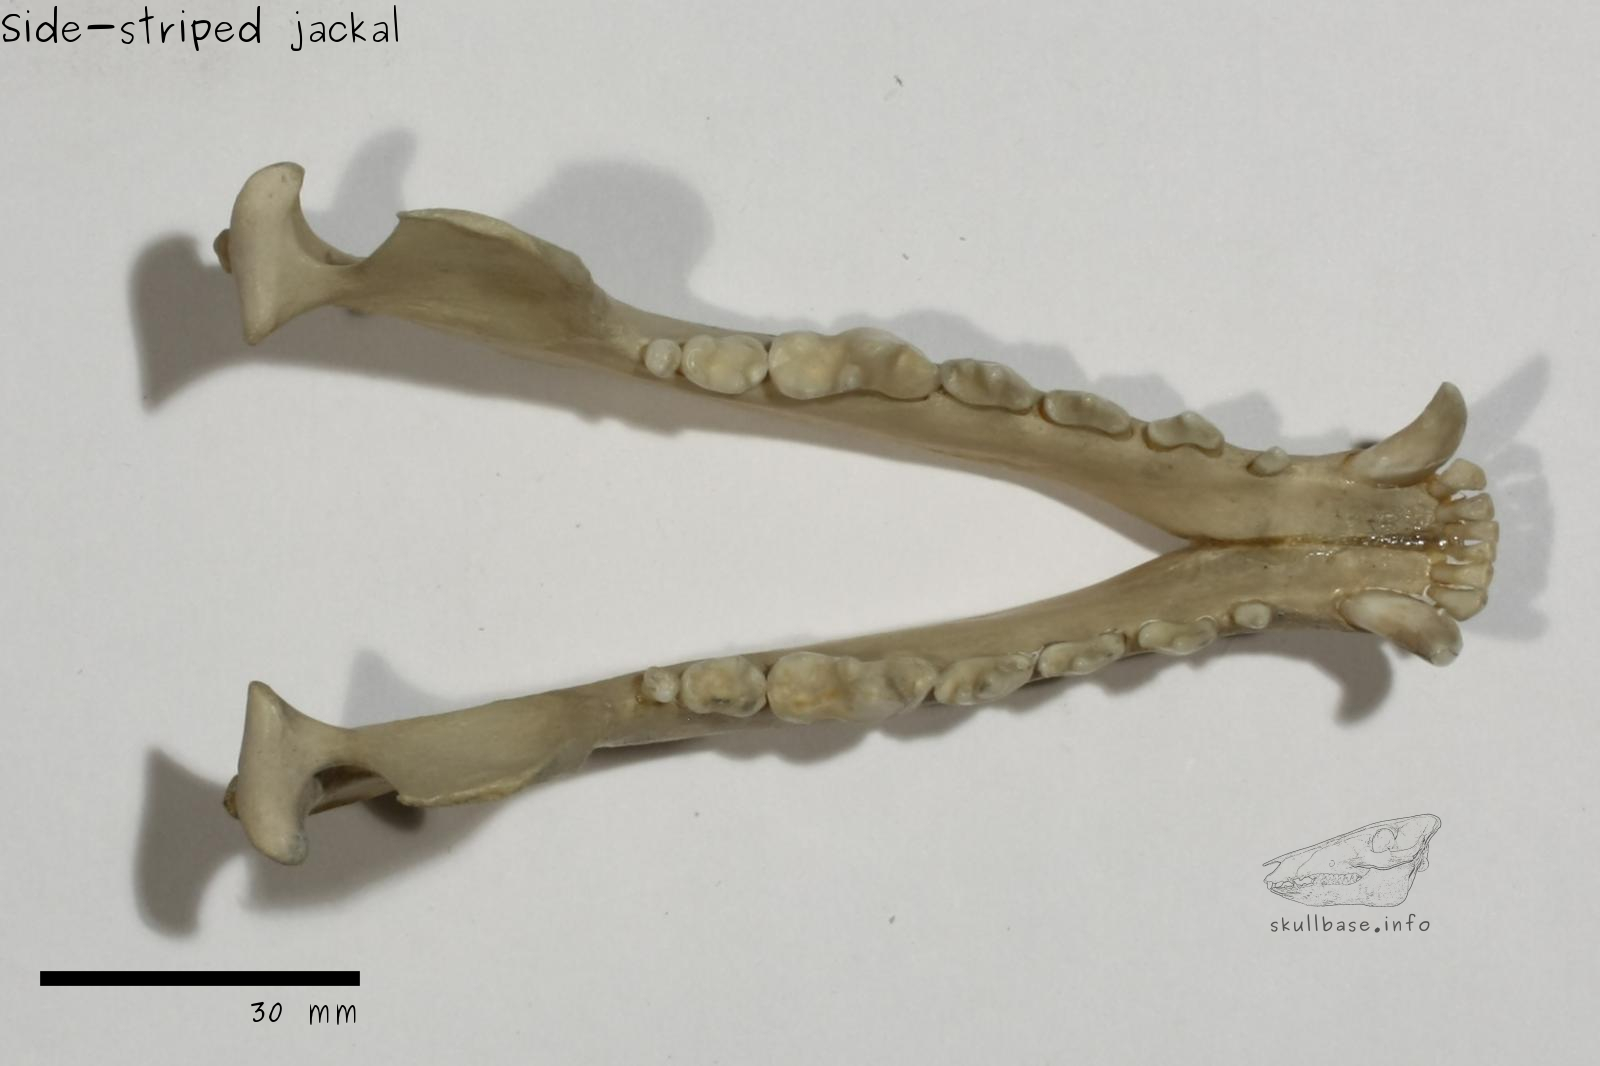 Side-striped jackal (Canis adustus) jaw